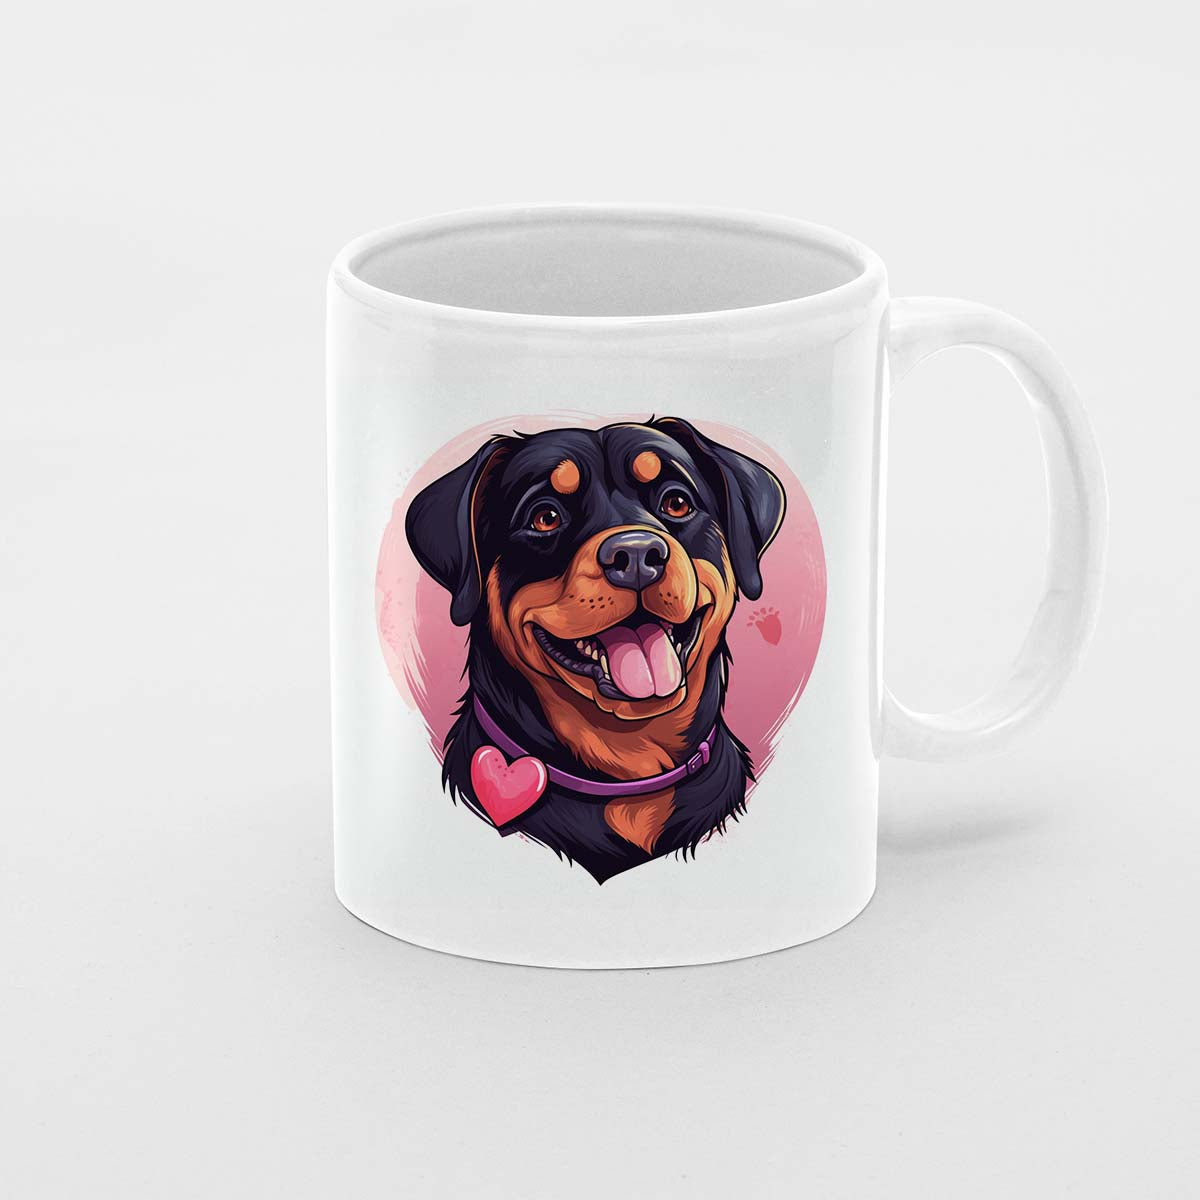 Custom Valentine's Day Dog Mug, Personalized Valentine's Day Gift for Dog Lover, Cute Rottweiler Love Ceramic Mug, Dog Coffee Mugs, Personalized Pet Mugs, Cute Valentine Puppy Heart Ceramic Mug, Valentines Gift